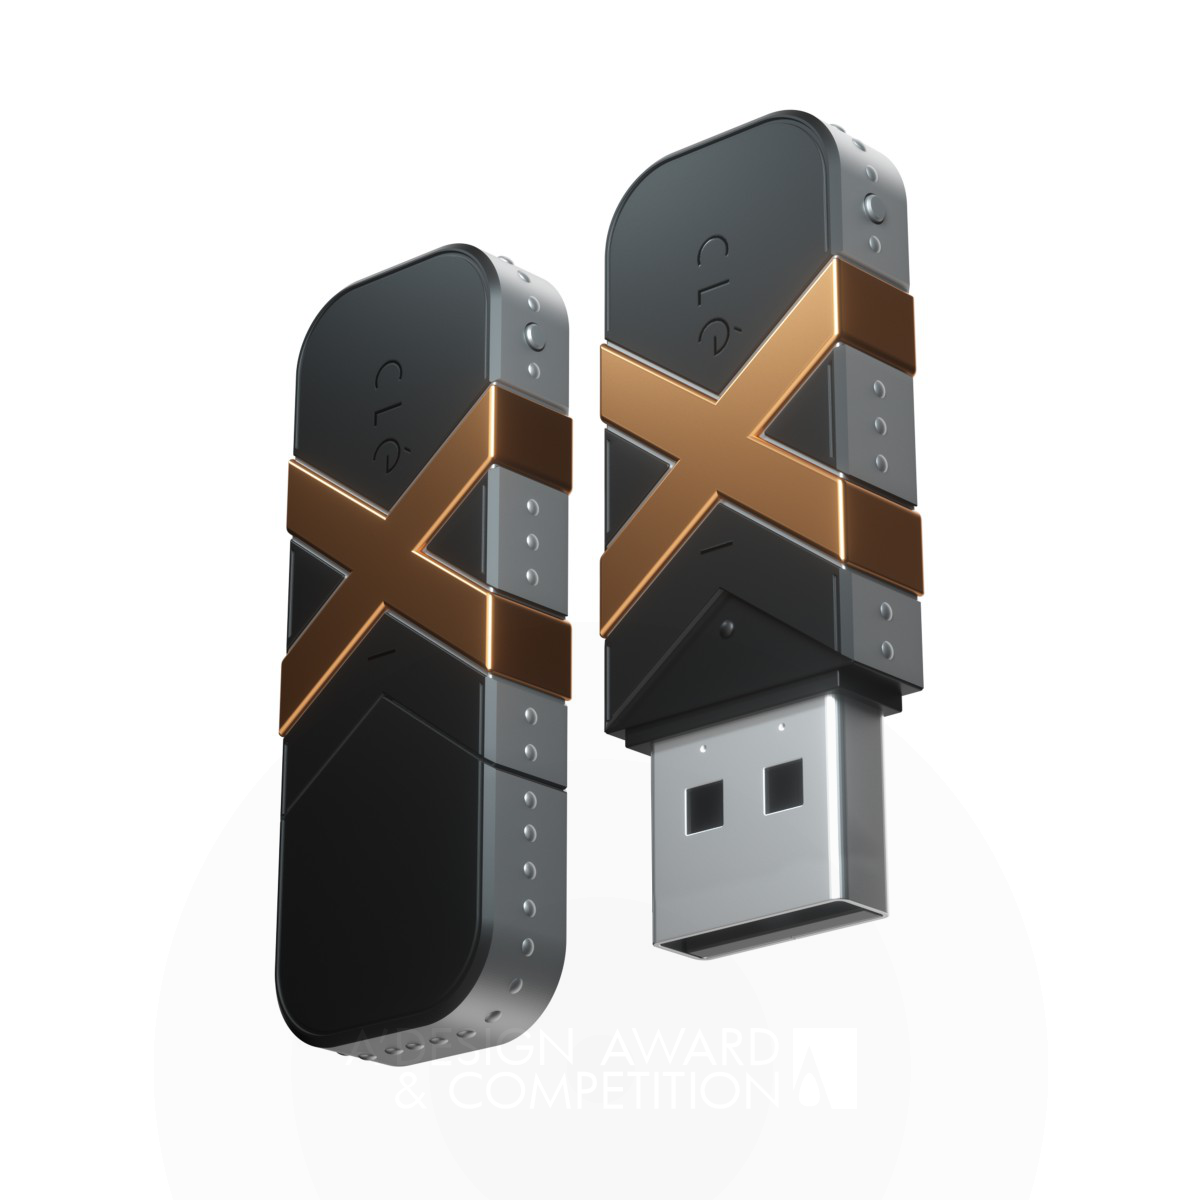 Clexi Secure Flash Drive